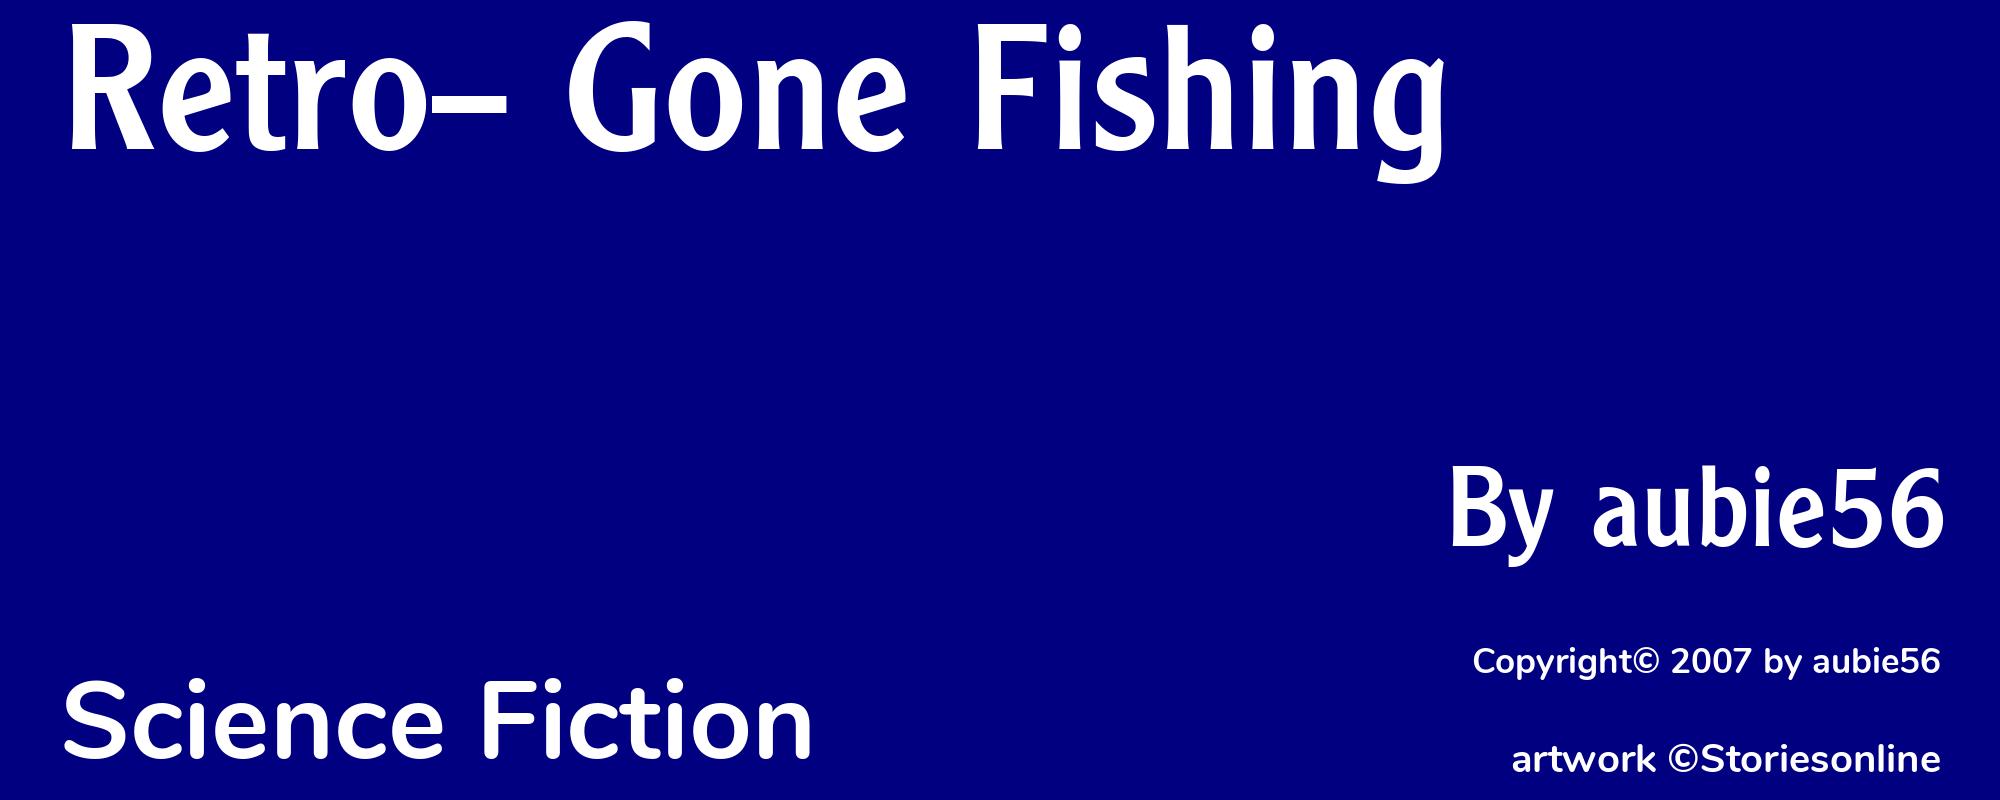 Retro-- Gone Fishing - Cover